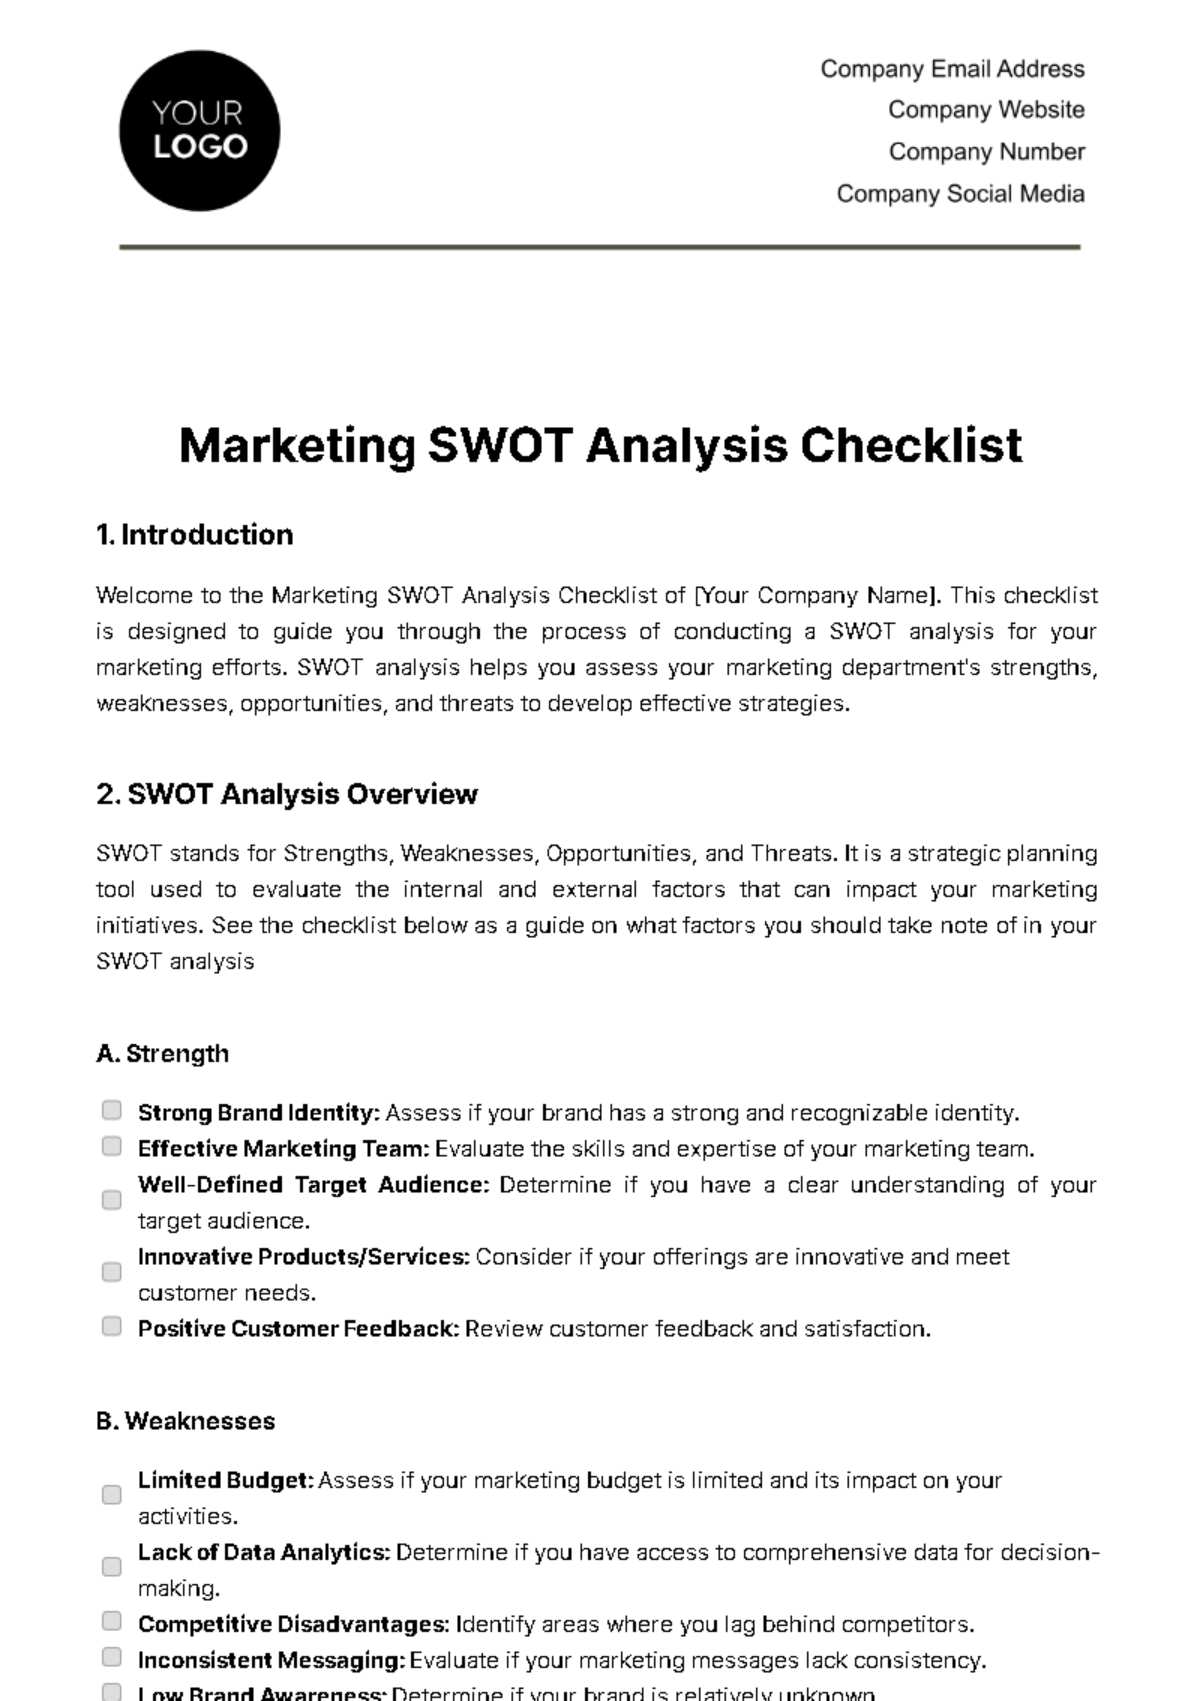 Free Marketing SWOT Analysis Checklist Template